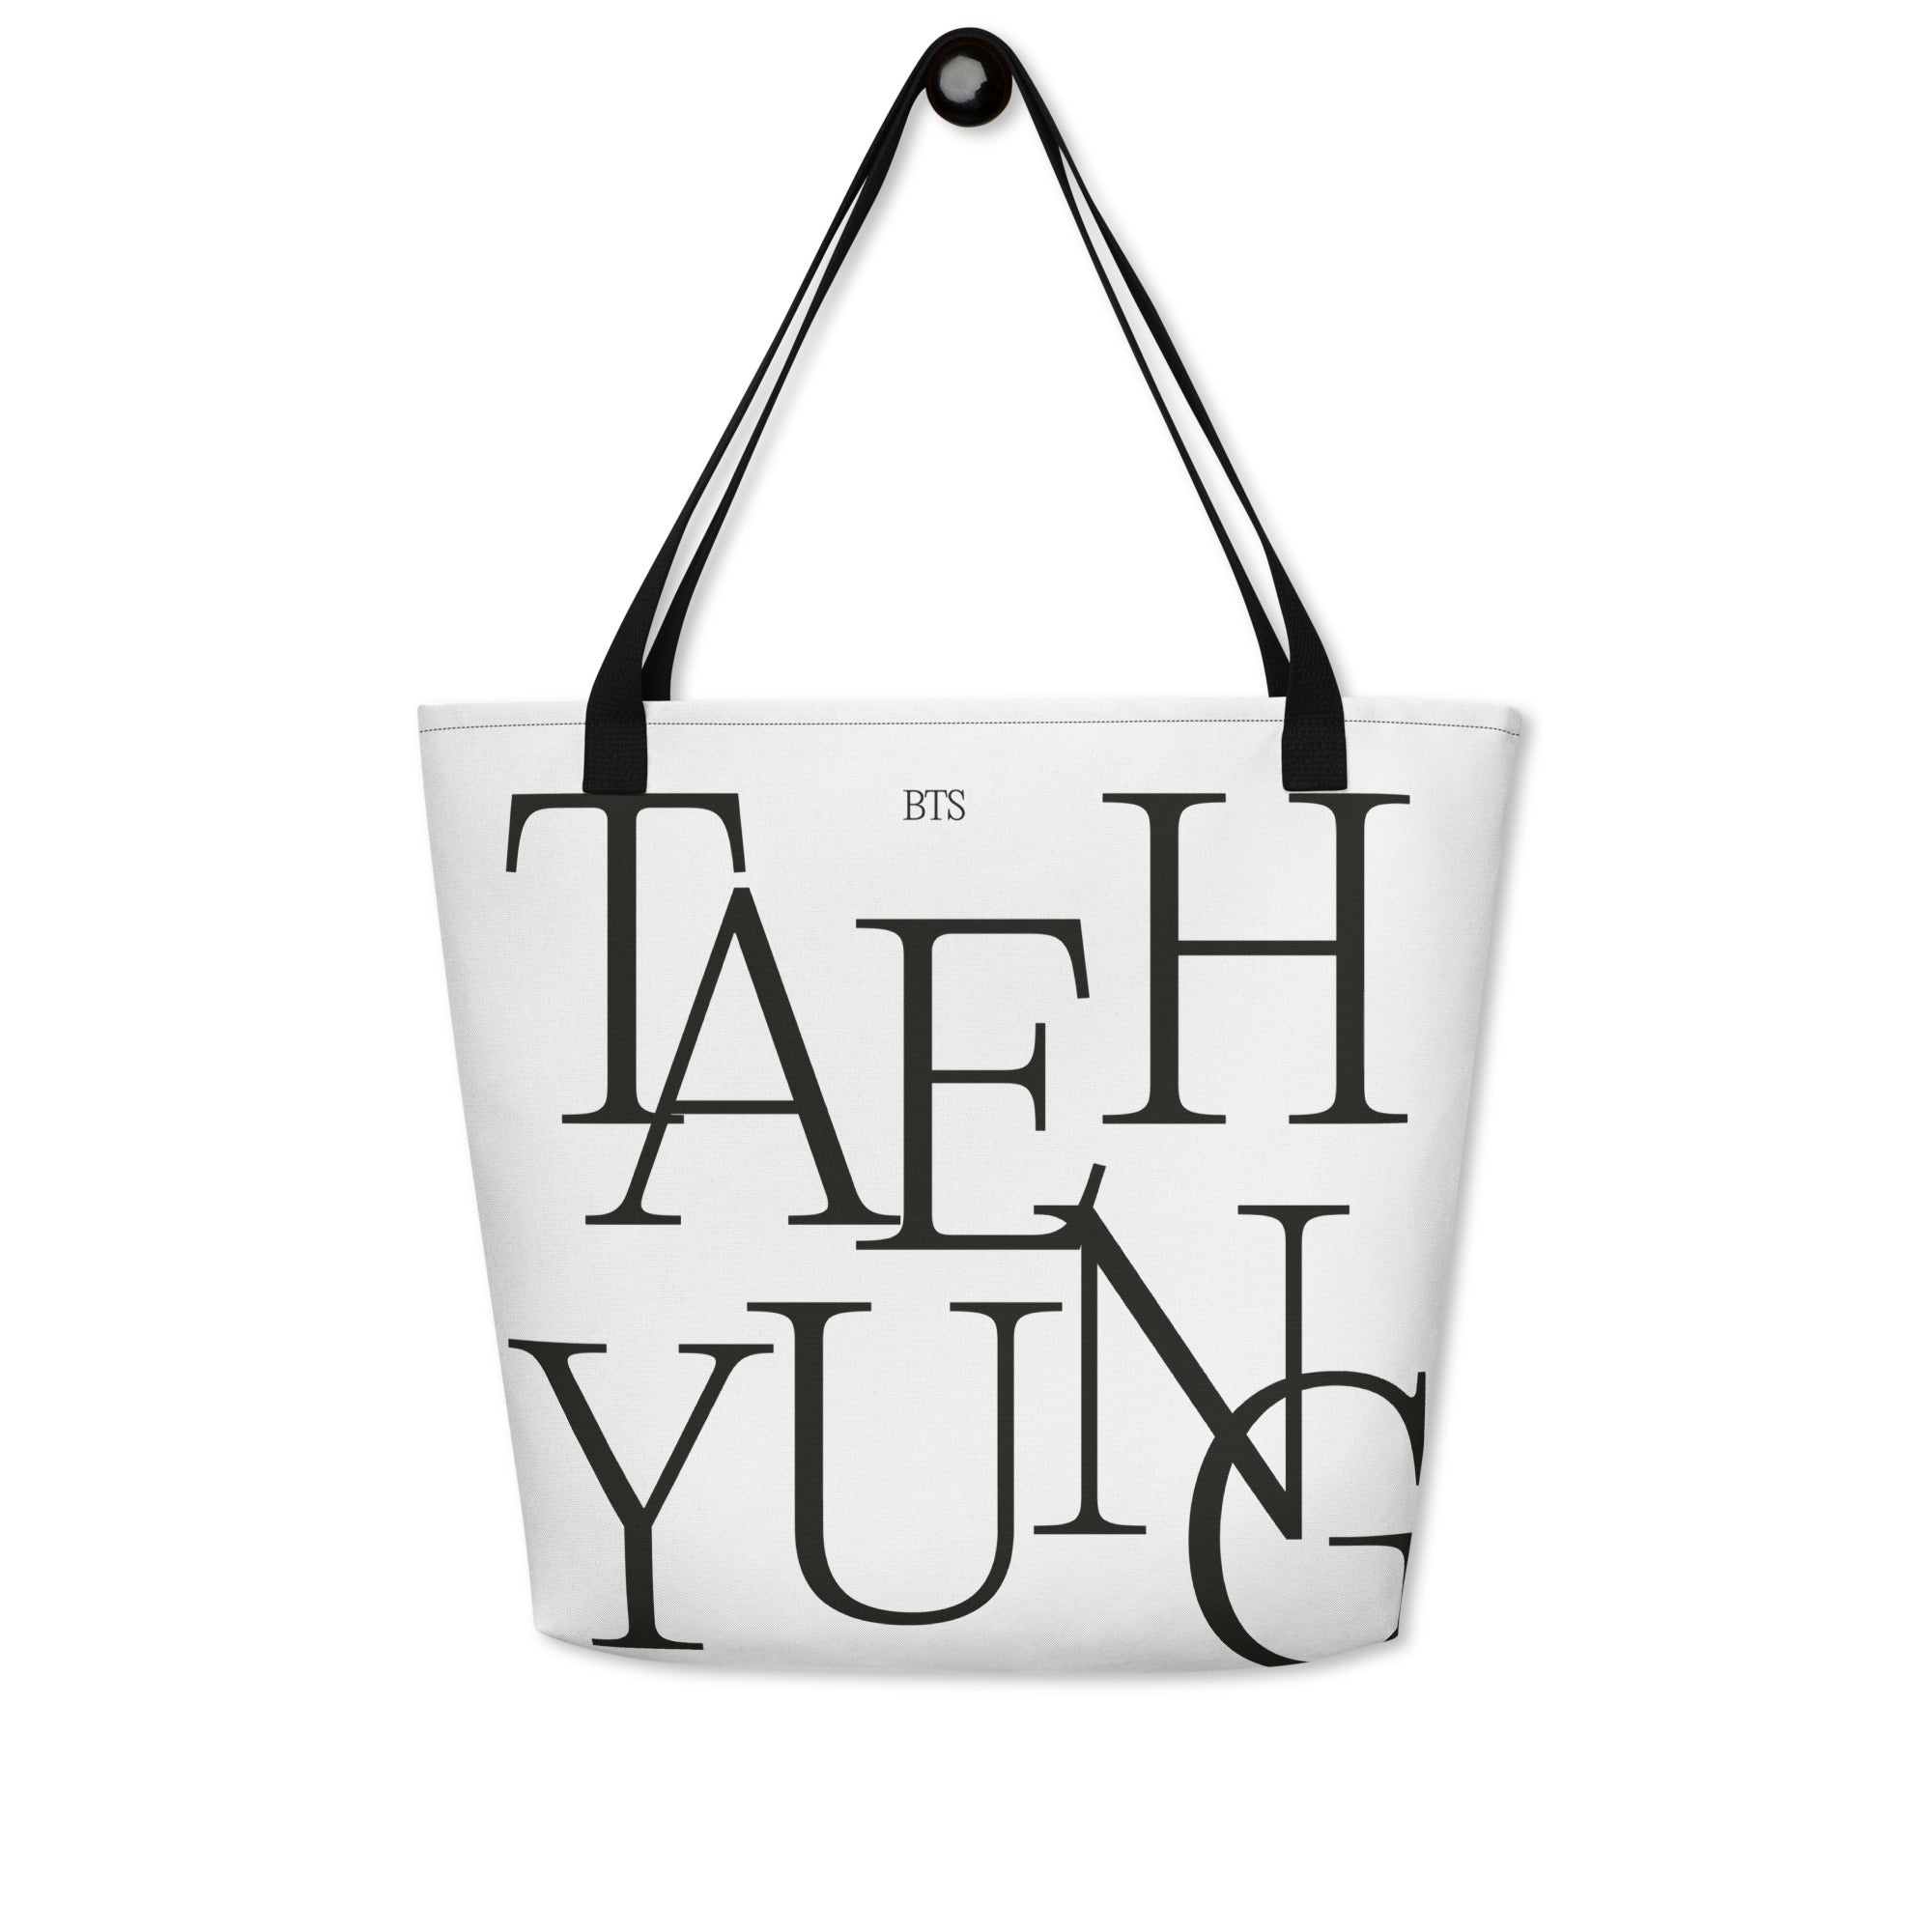 BTS Tote Bag Kim Taehyung Bag V BTS Bag Taehyung Bag 